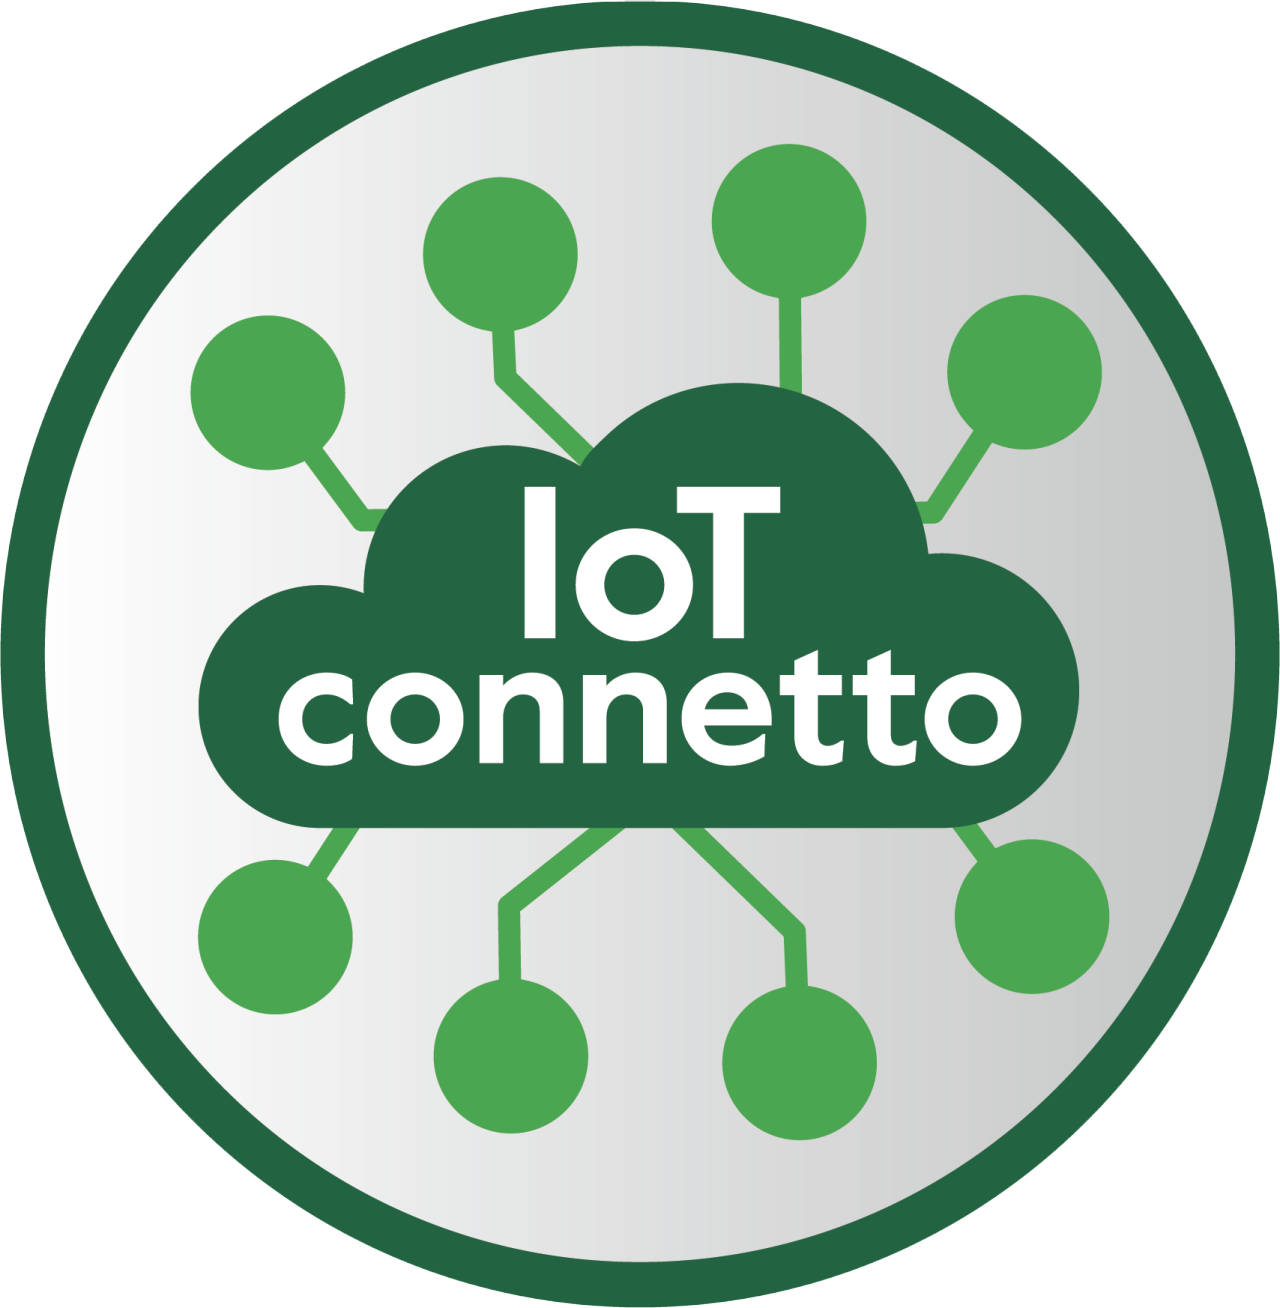 IoT Connetto